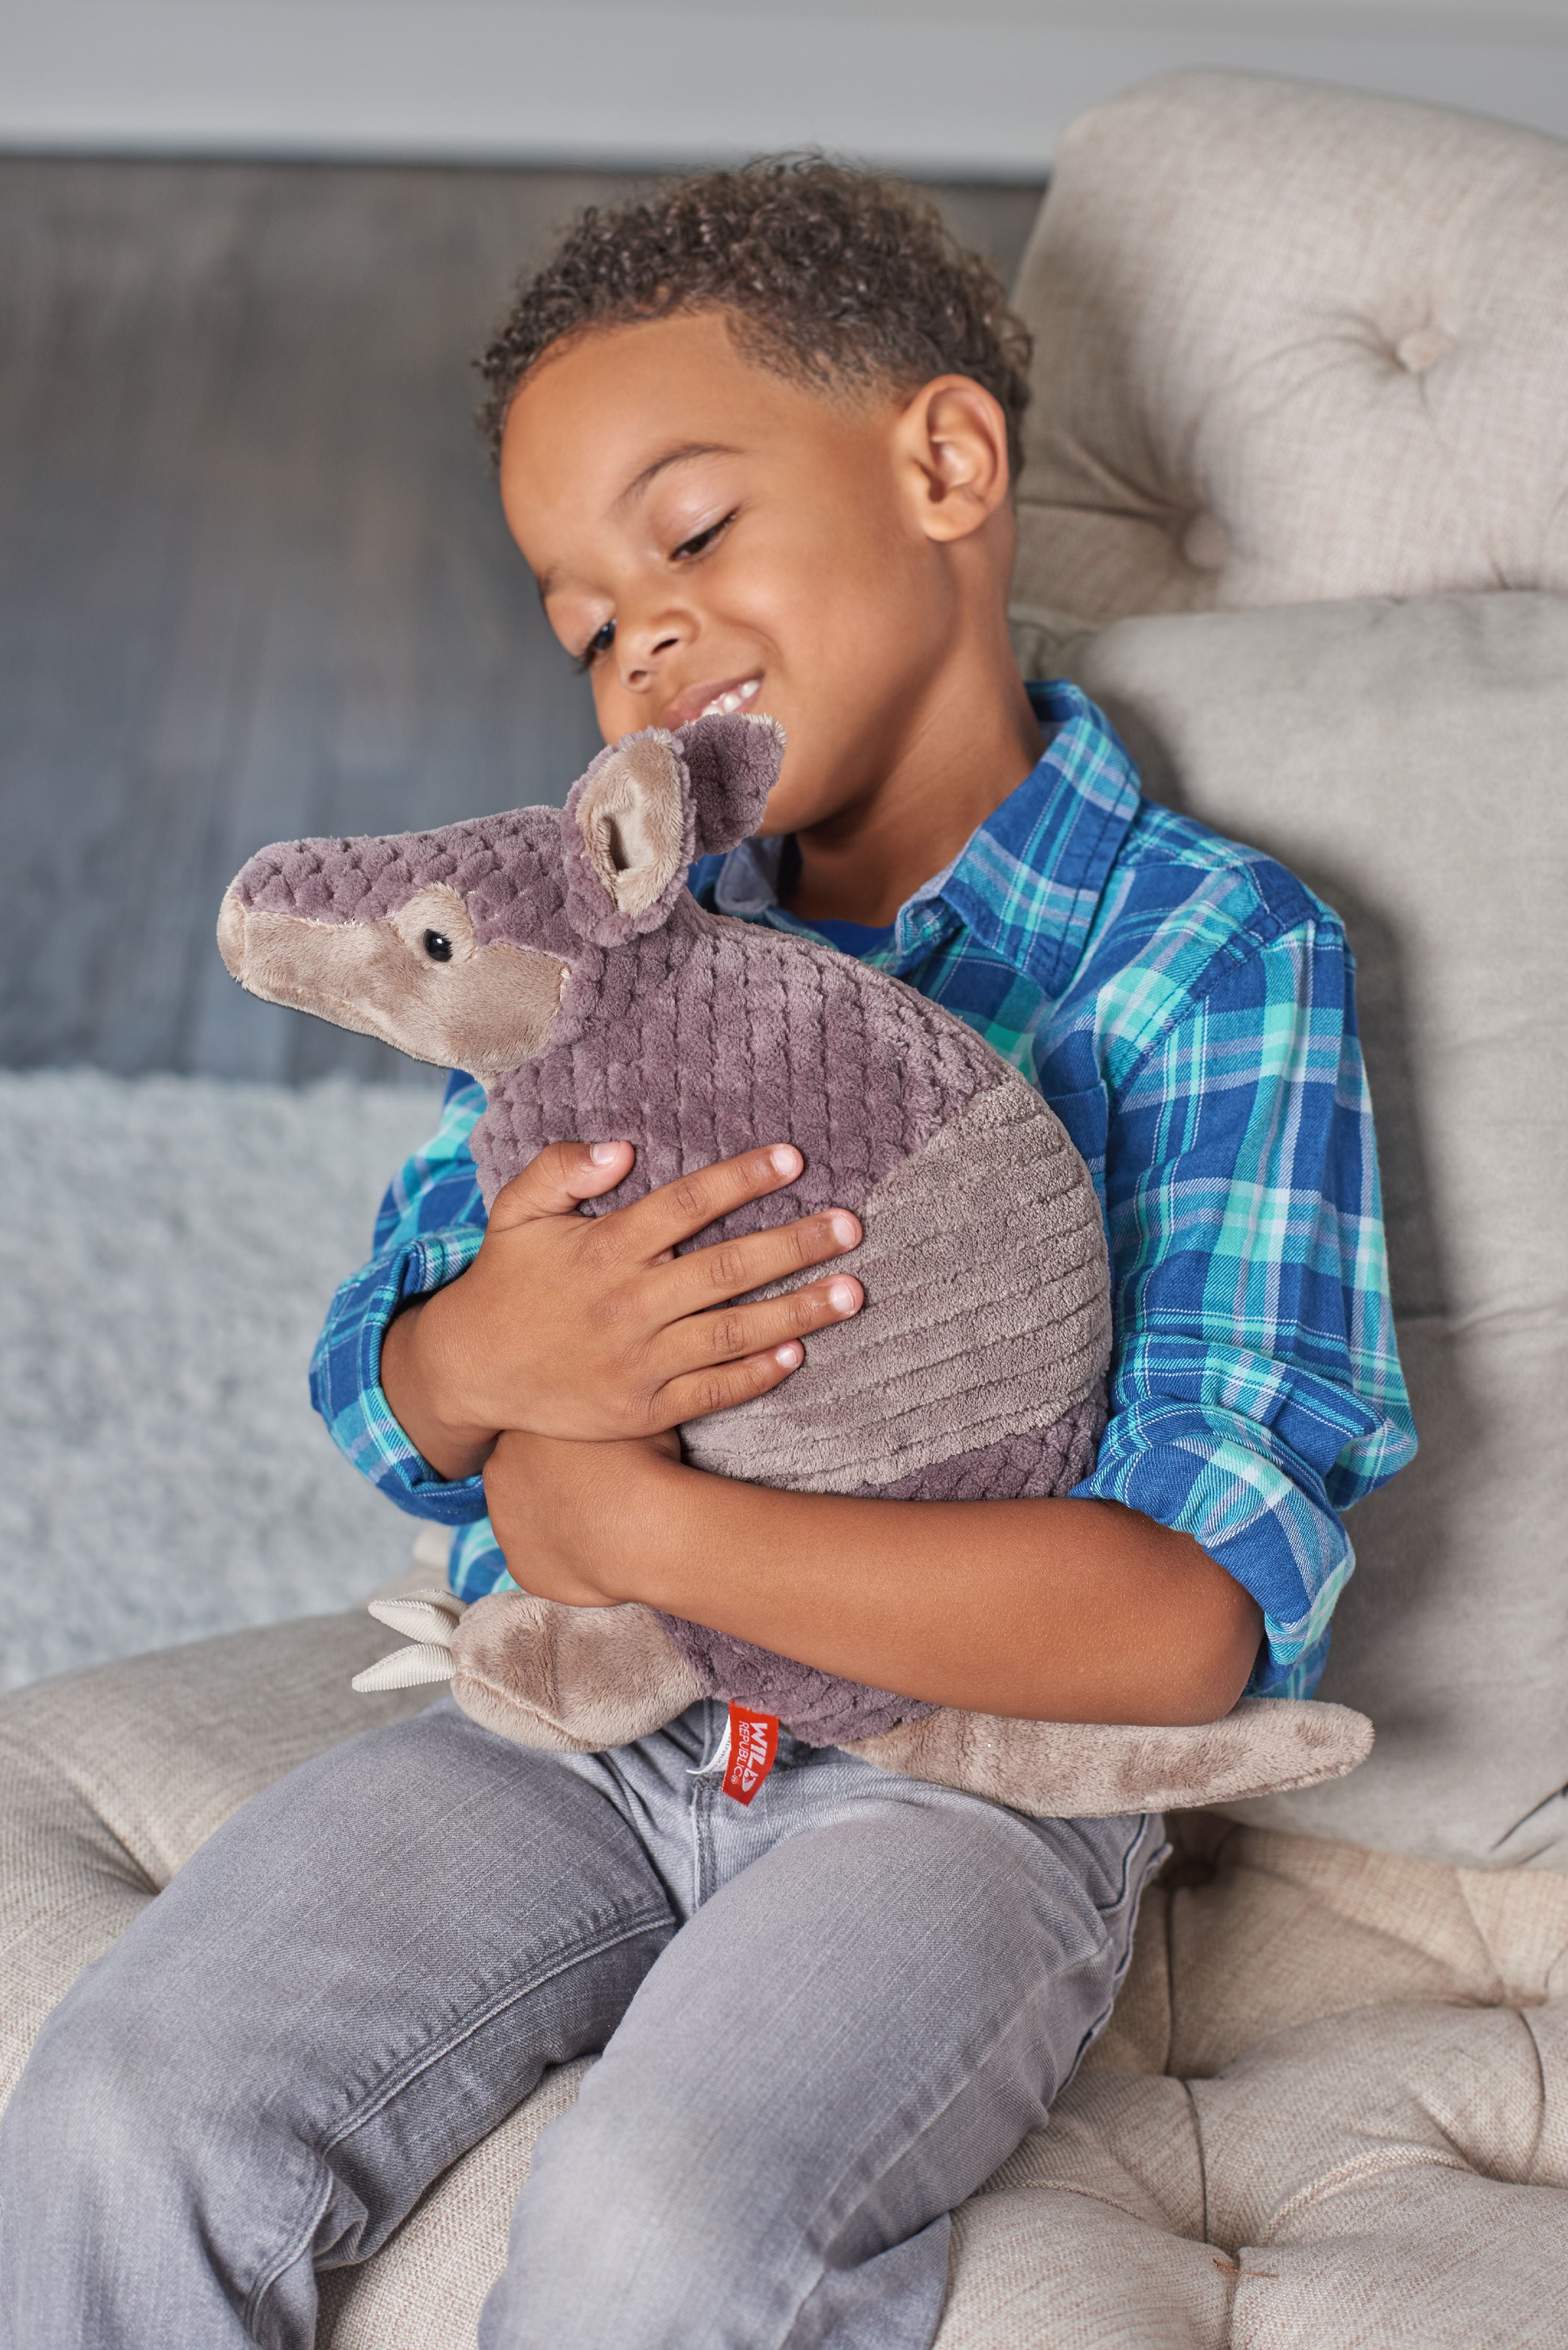 Emotional Support Armadillo Stuffed Animal Toy 